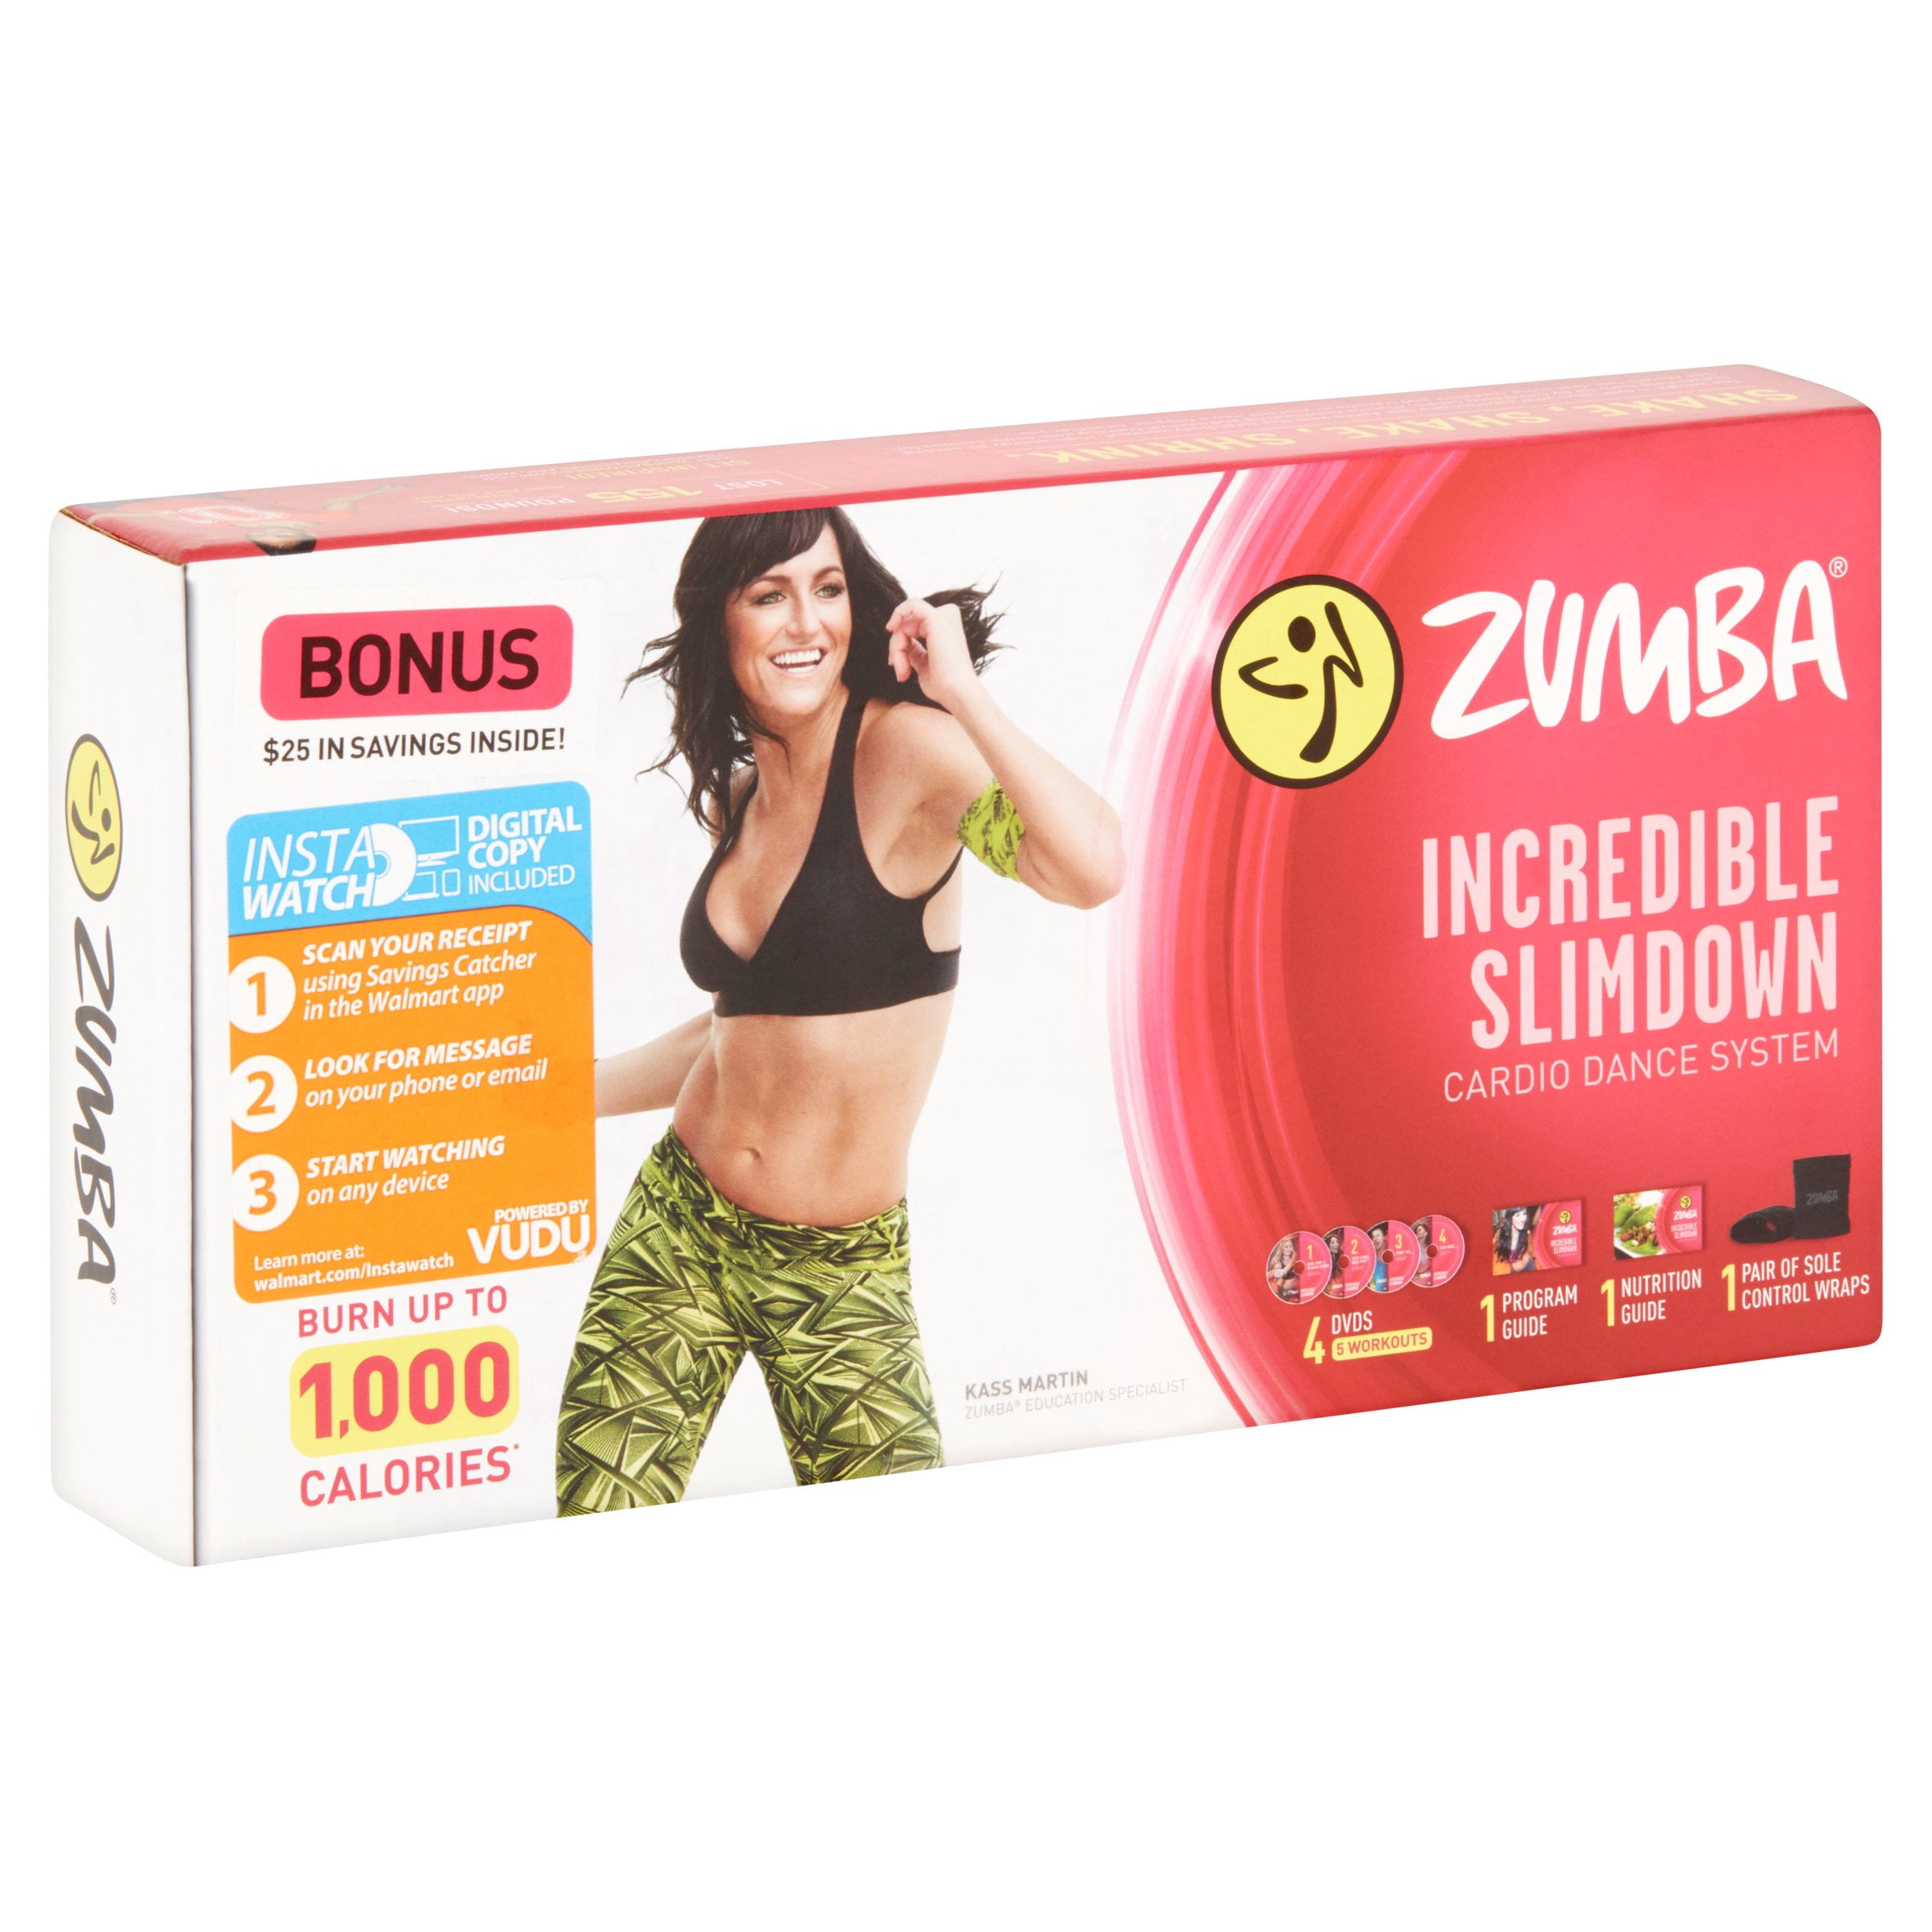 NEU* Zumba Fitness Set Incredible Slimdown Cardio Dance System 4 Dvds Stülper 